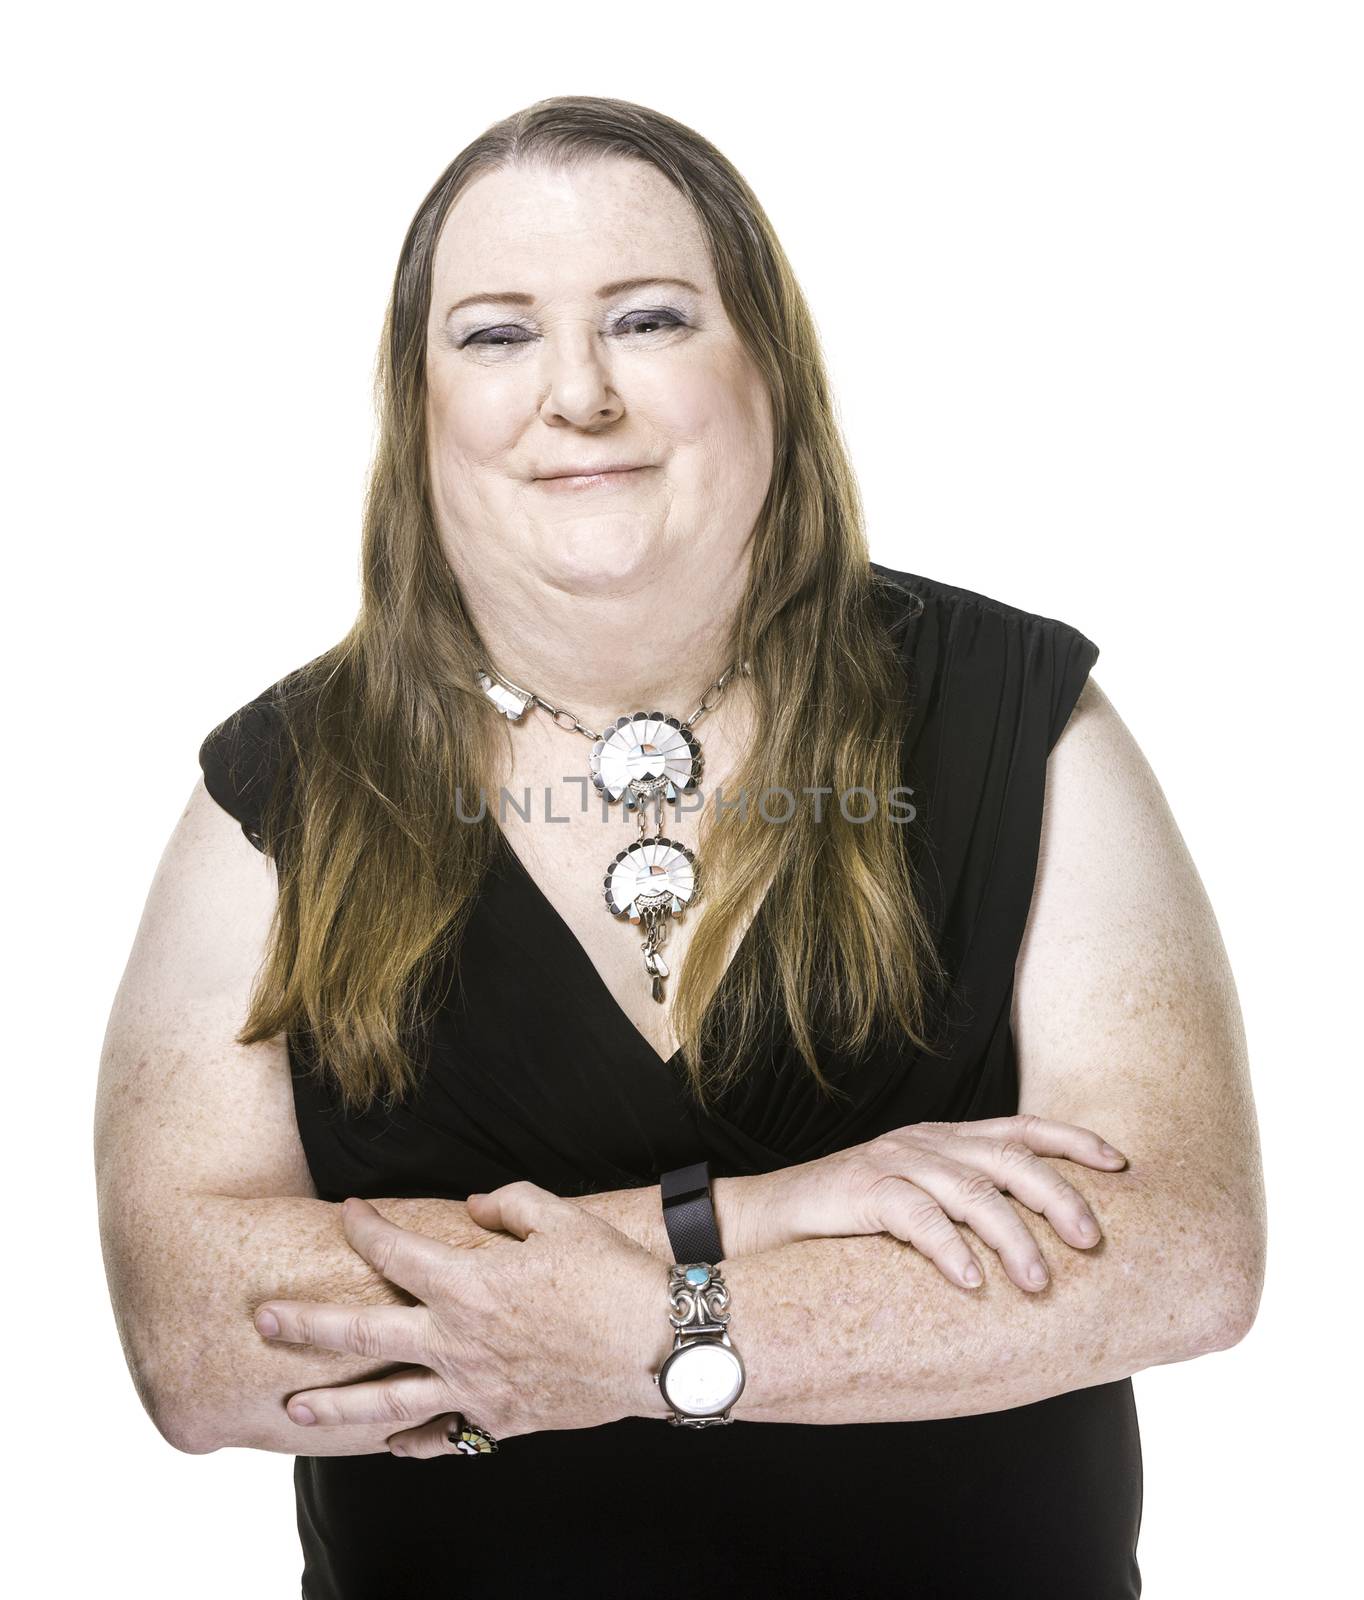 Closeup of Transgender Woman in Black Dress by Creatista